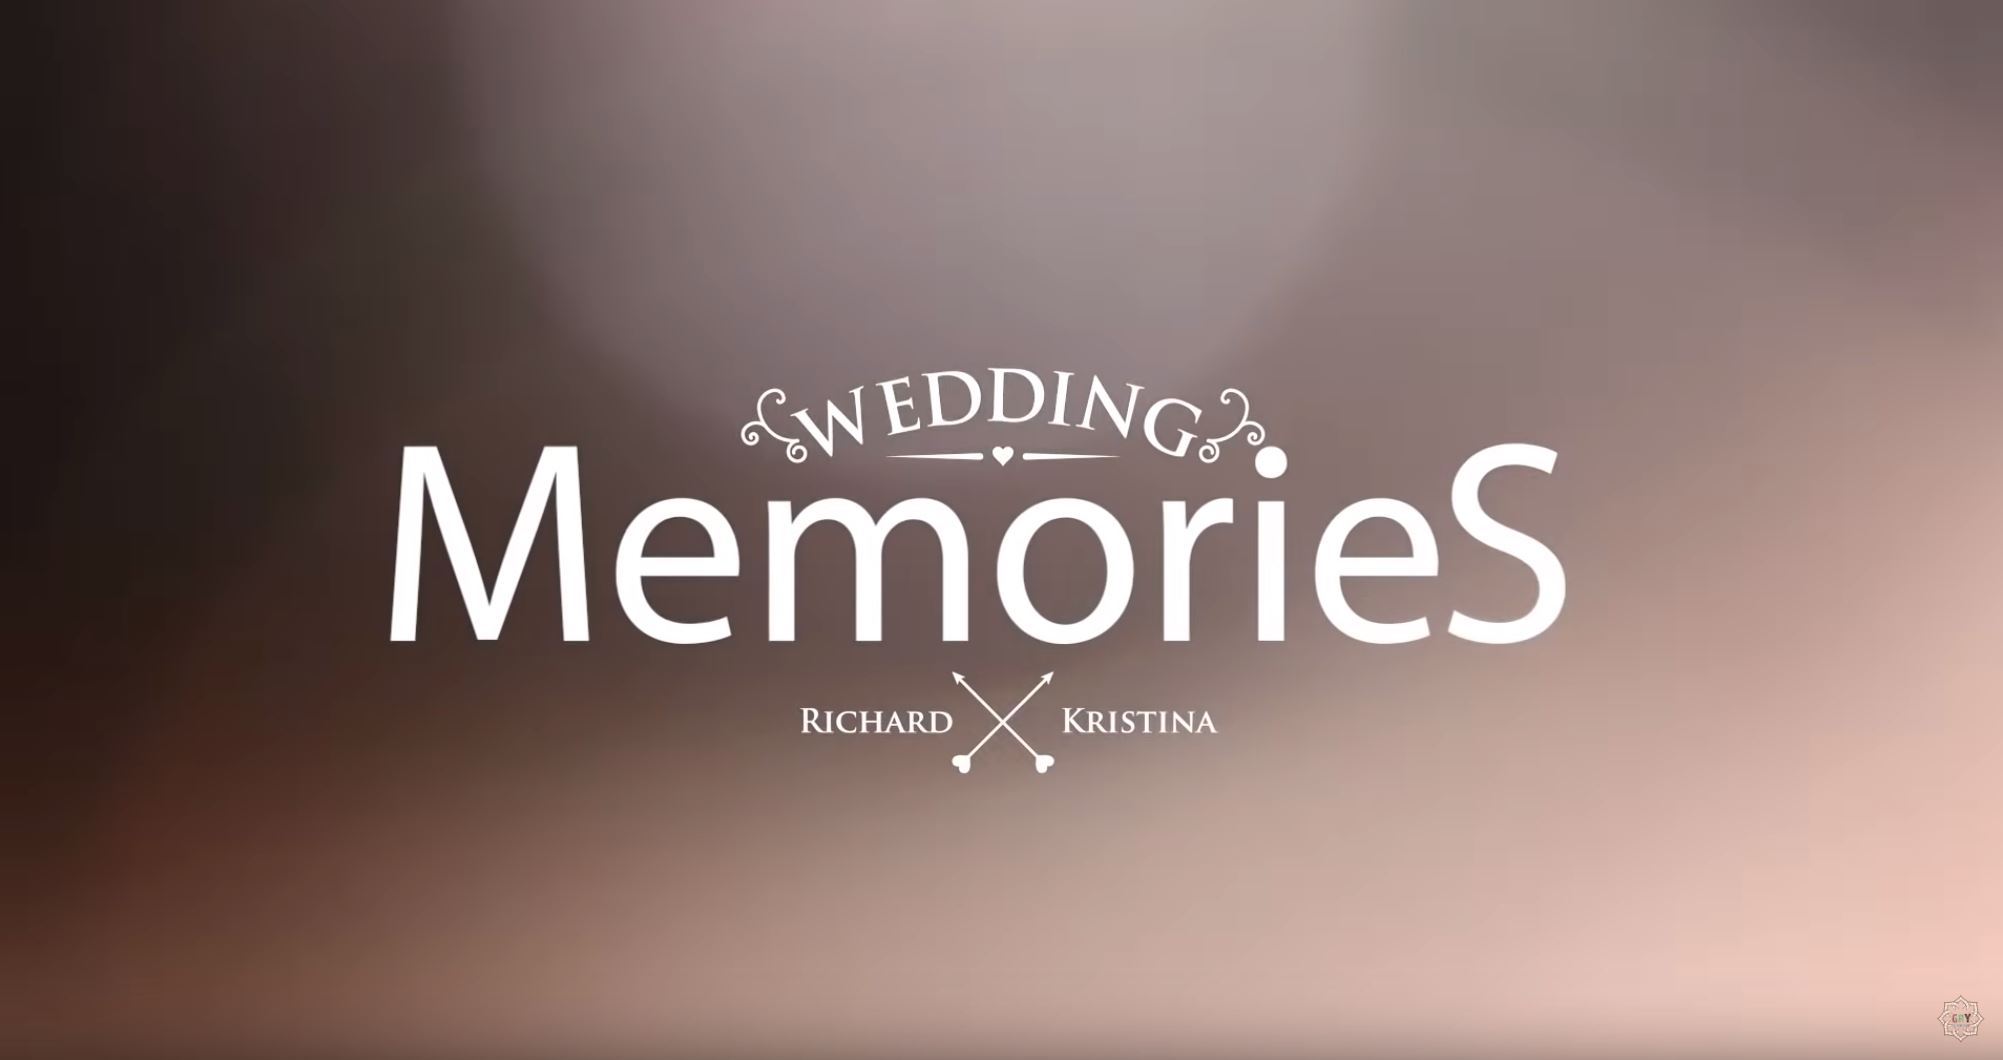 Adobe Premiere Wedding Projects